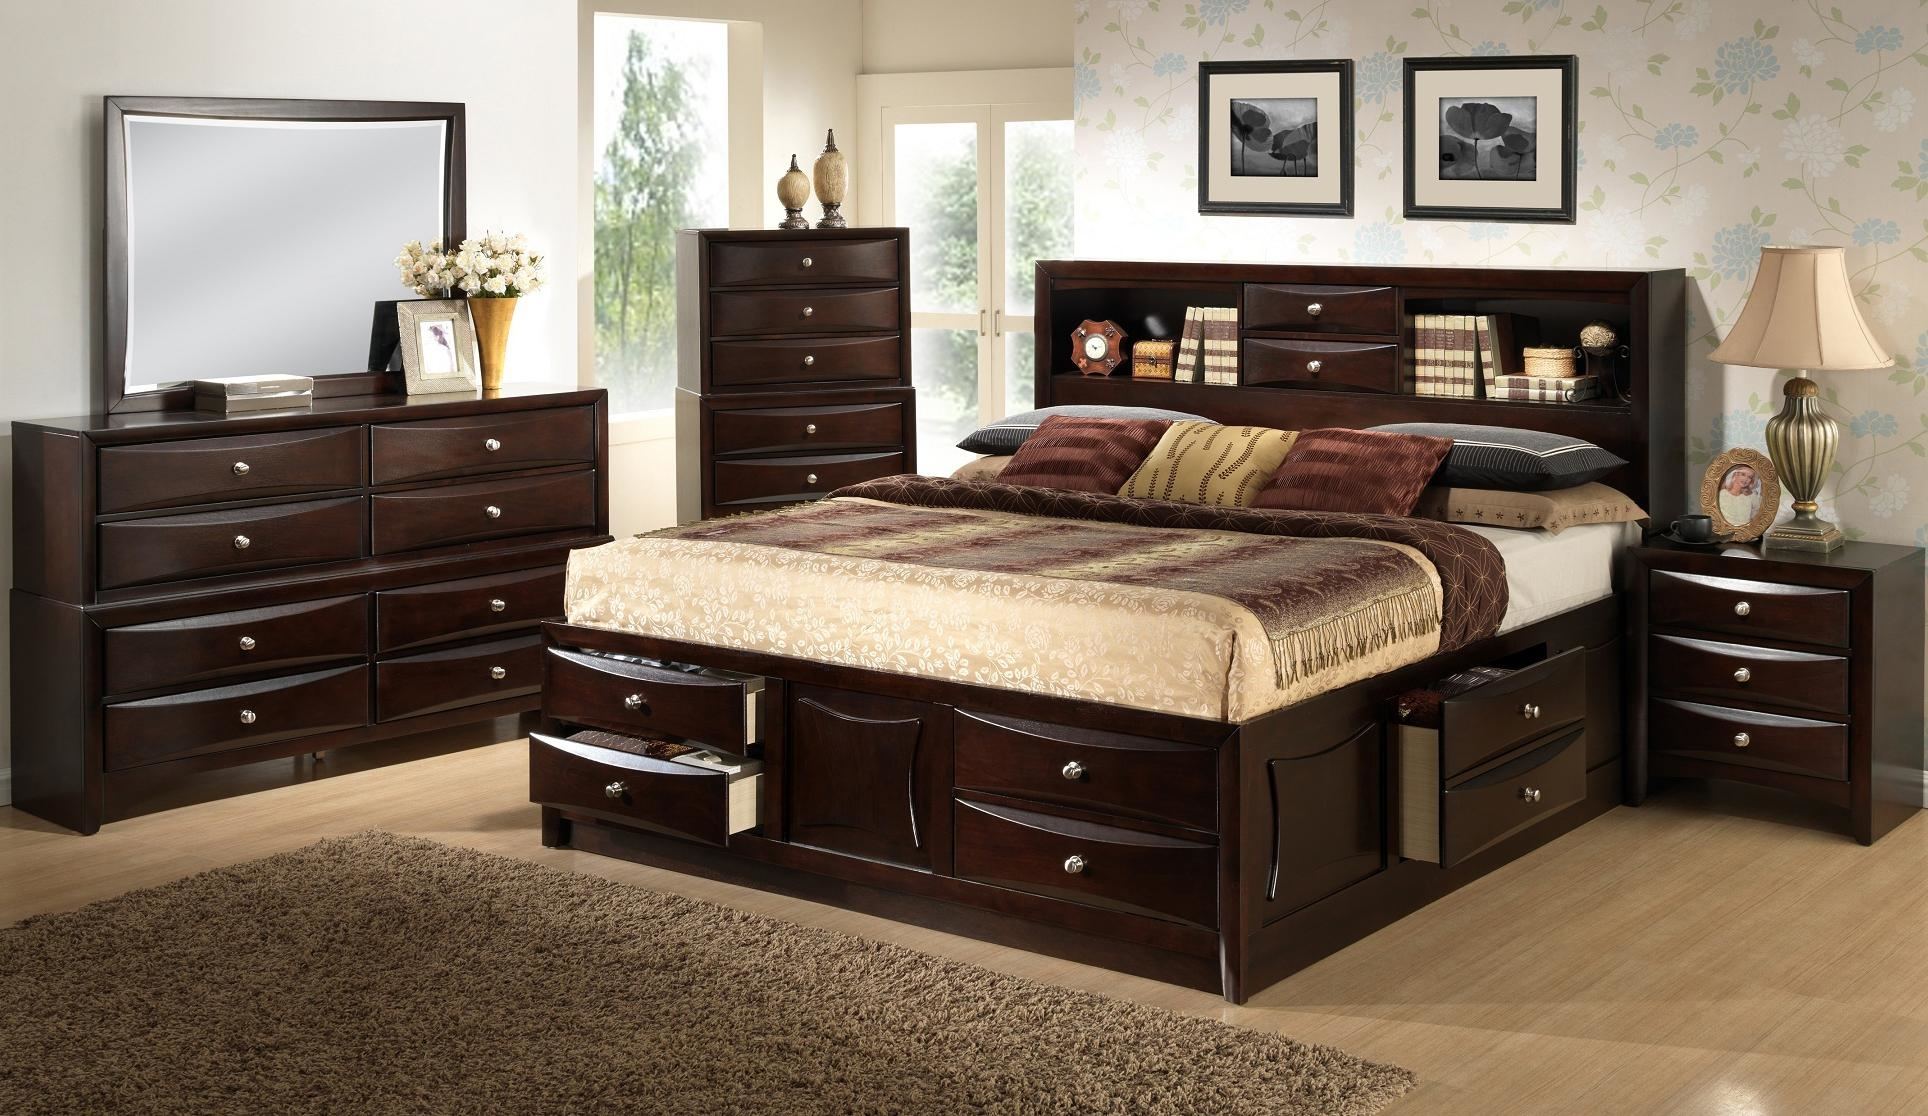 King Bedroom Sets Espresso Home Decor Inspirations Dark Wood Furniture